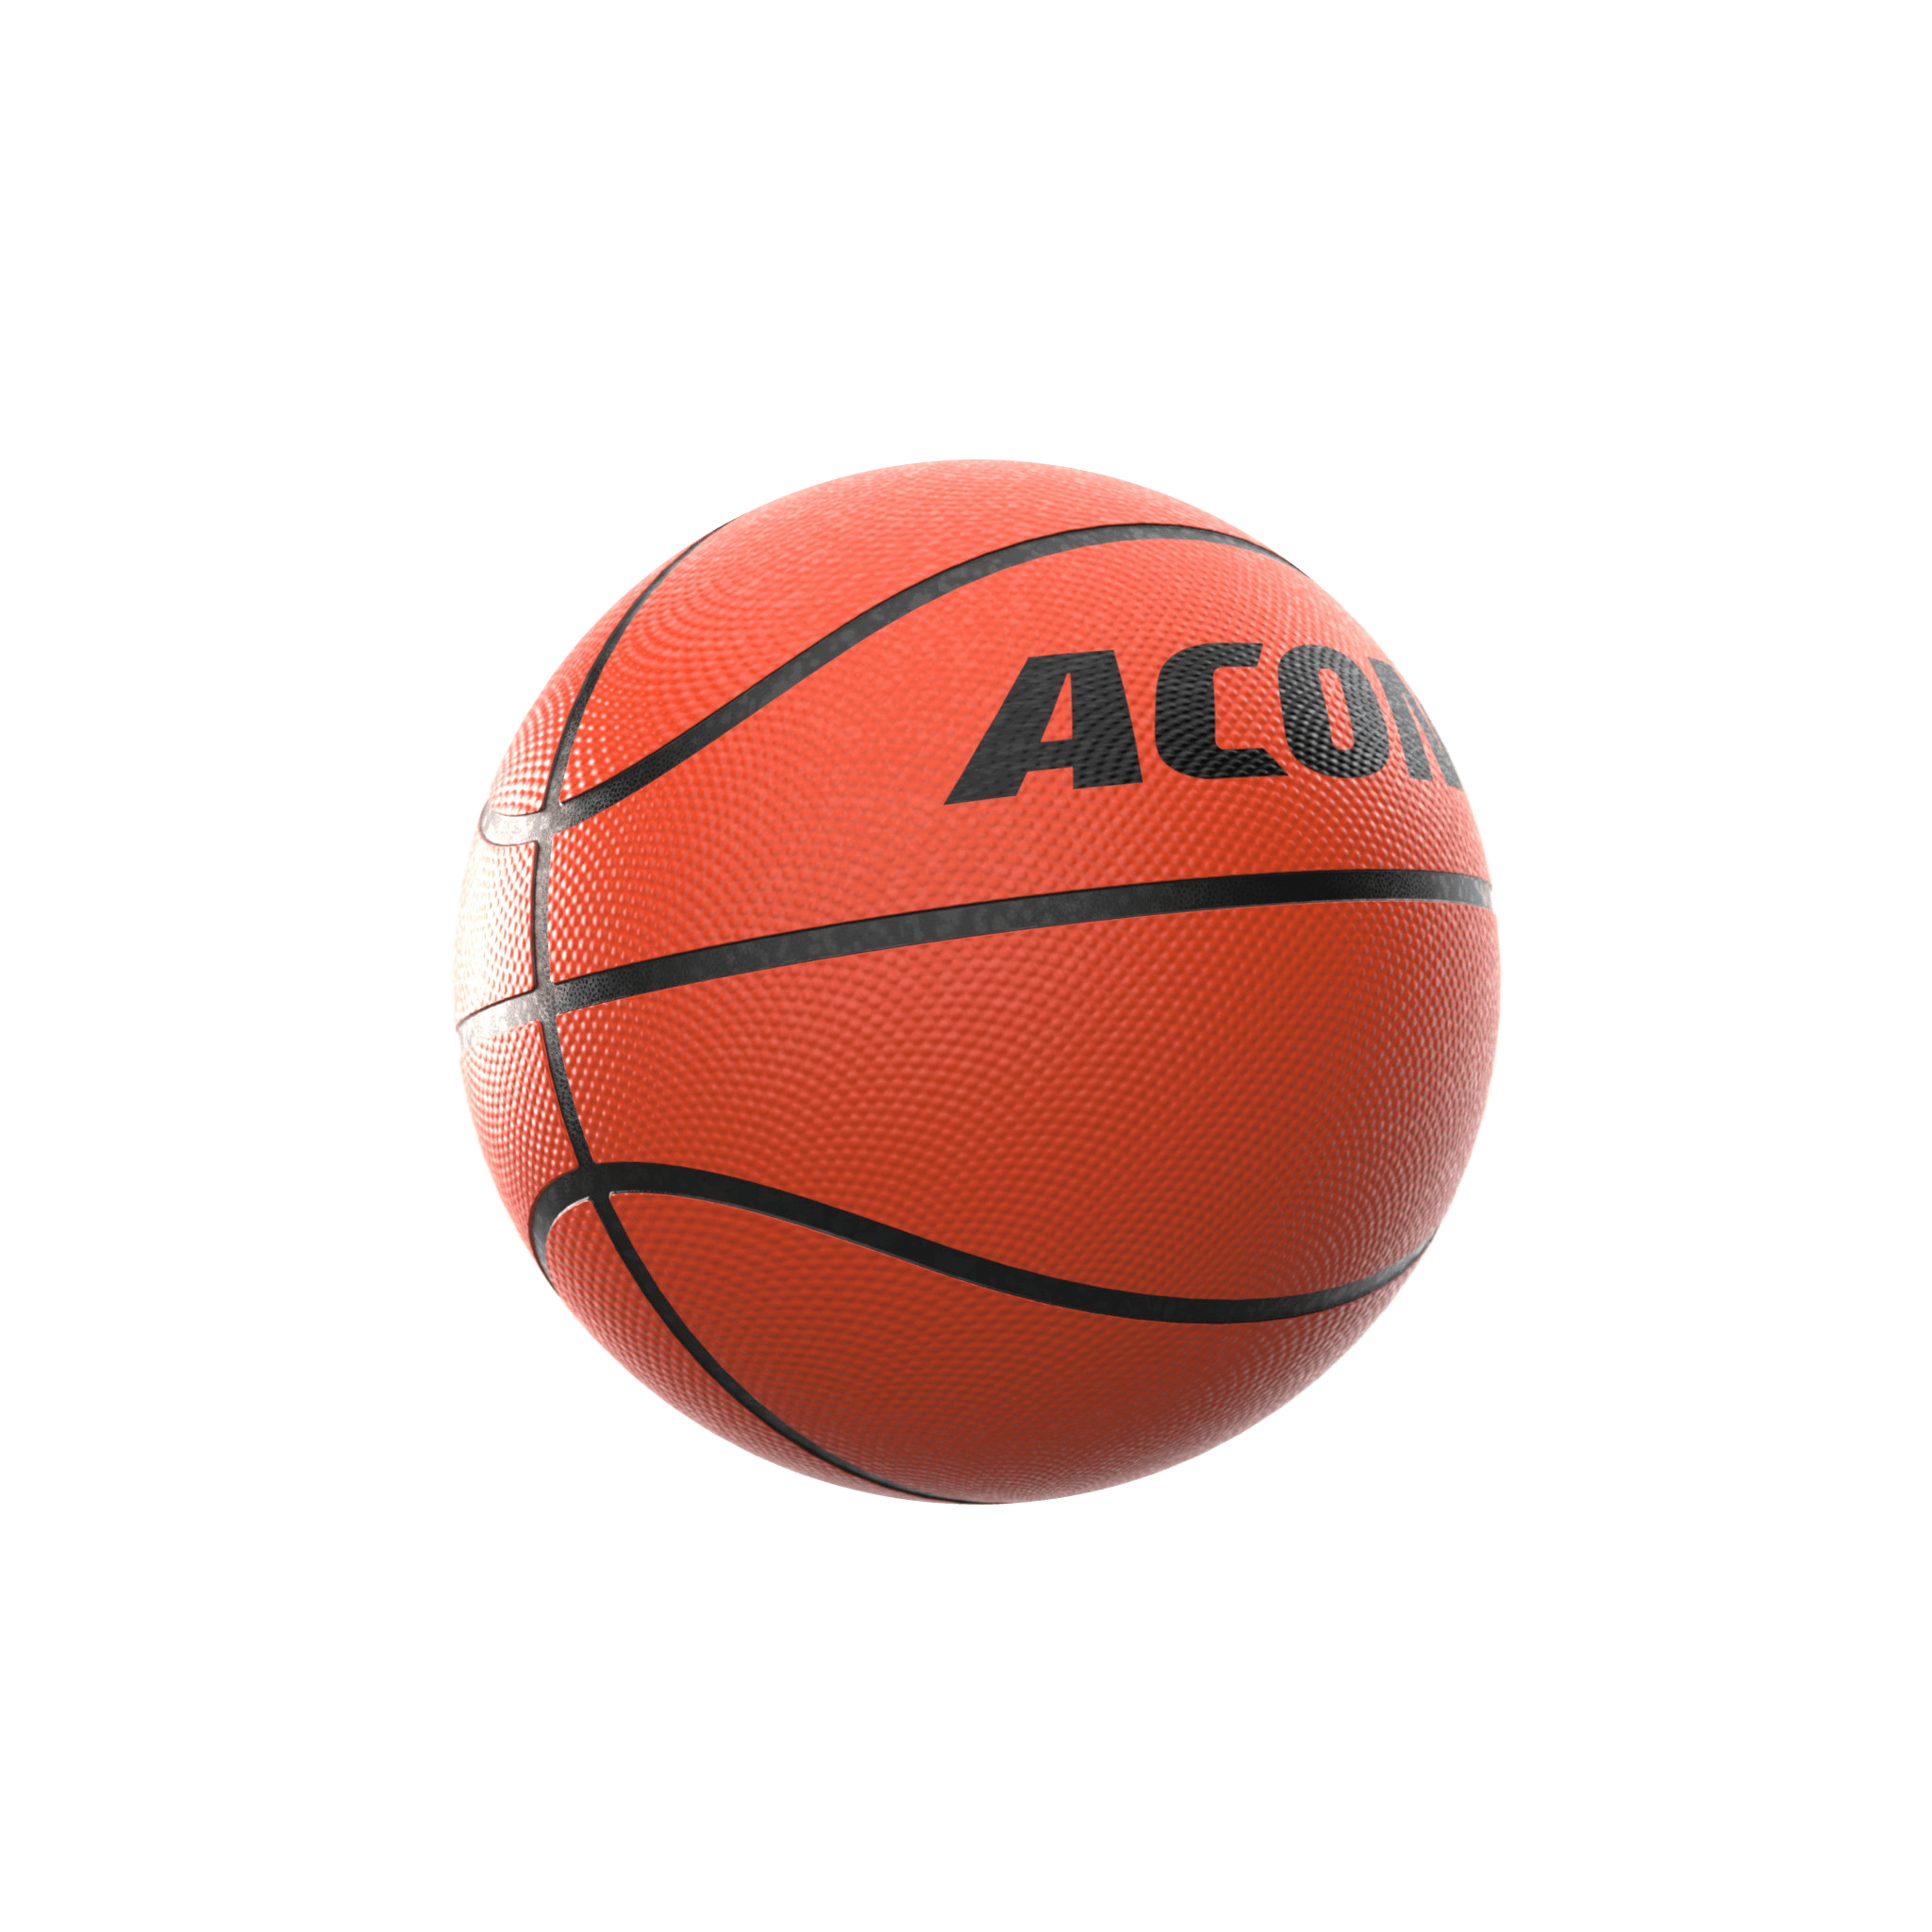 Ball für Acon Trampolin basketballkorb